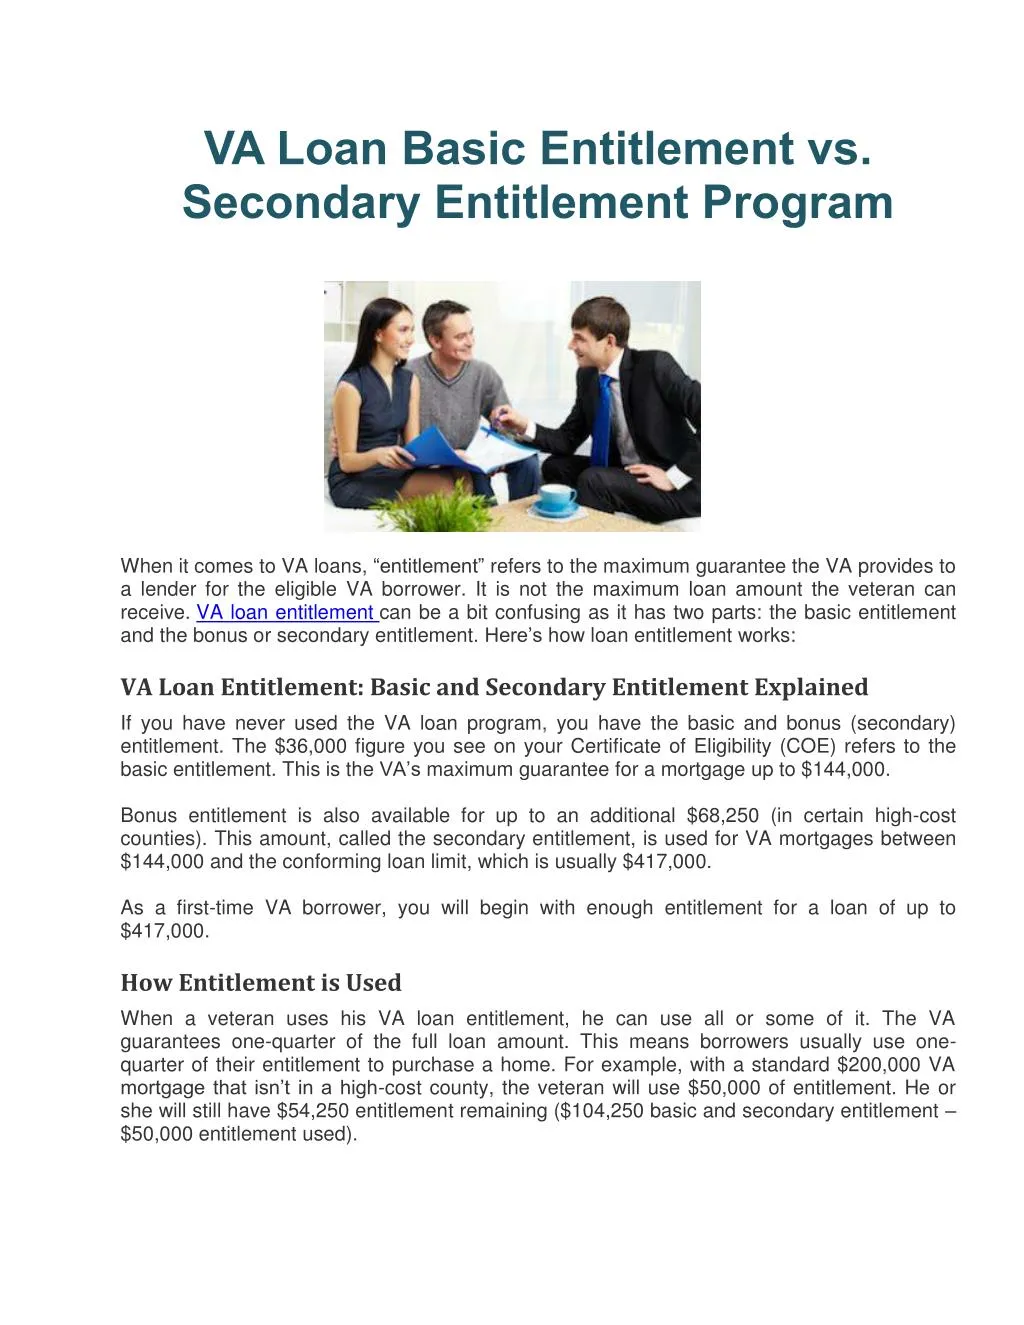 va loan basic entitlement vs secondary